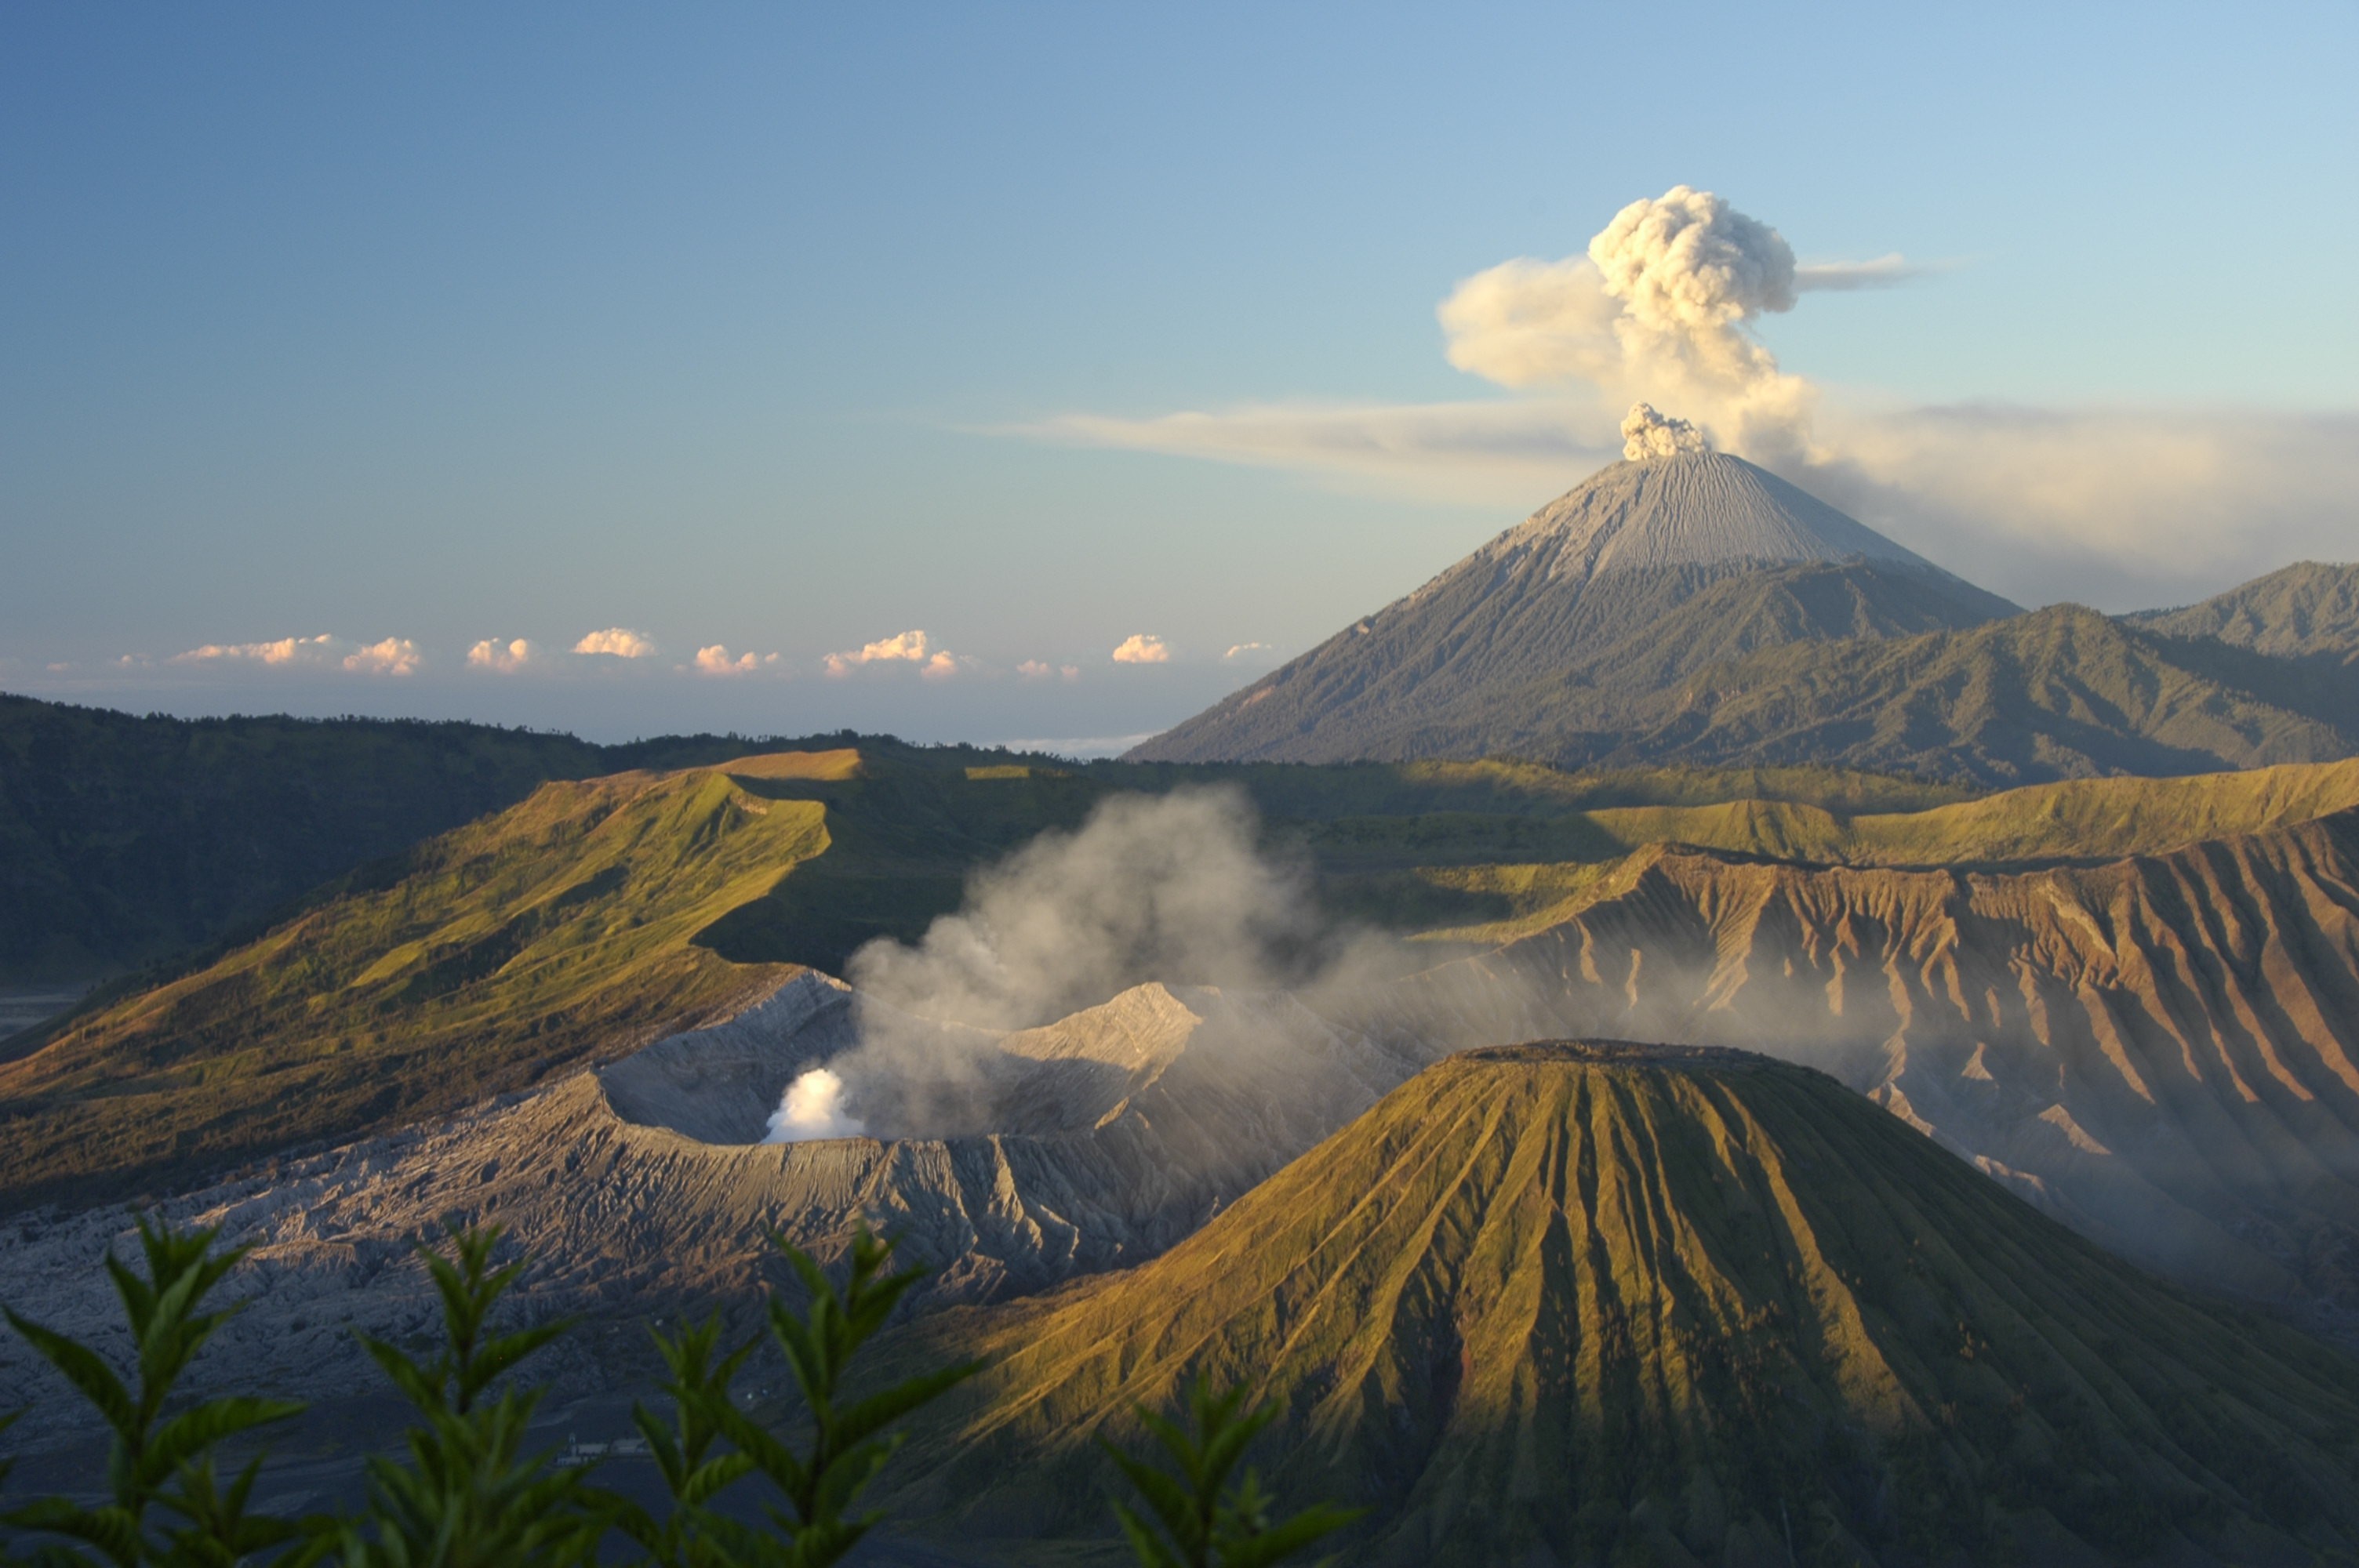 417258 Bild herunterladen erde/natur, berg bromo, eruption, indonesien, java (indonesien), schichtvulkan, vulkane - Hintergrundbilder und Bildschirmschoner kostenlos